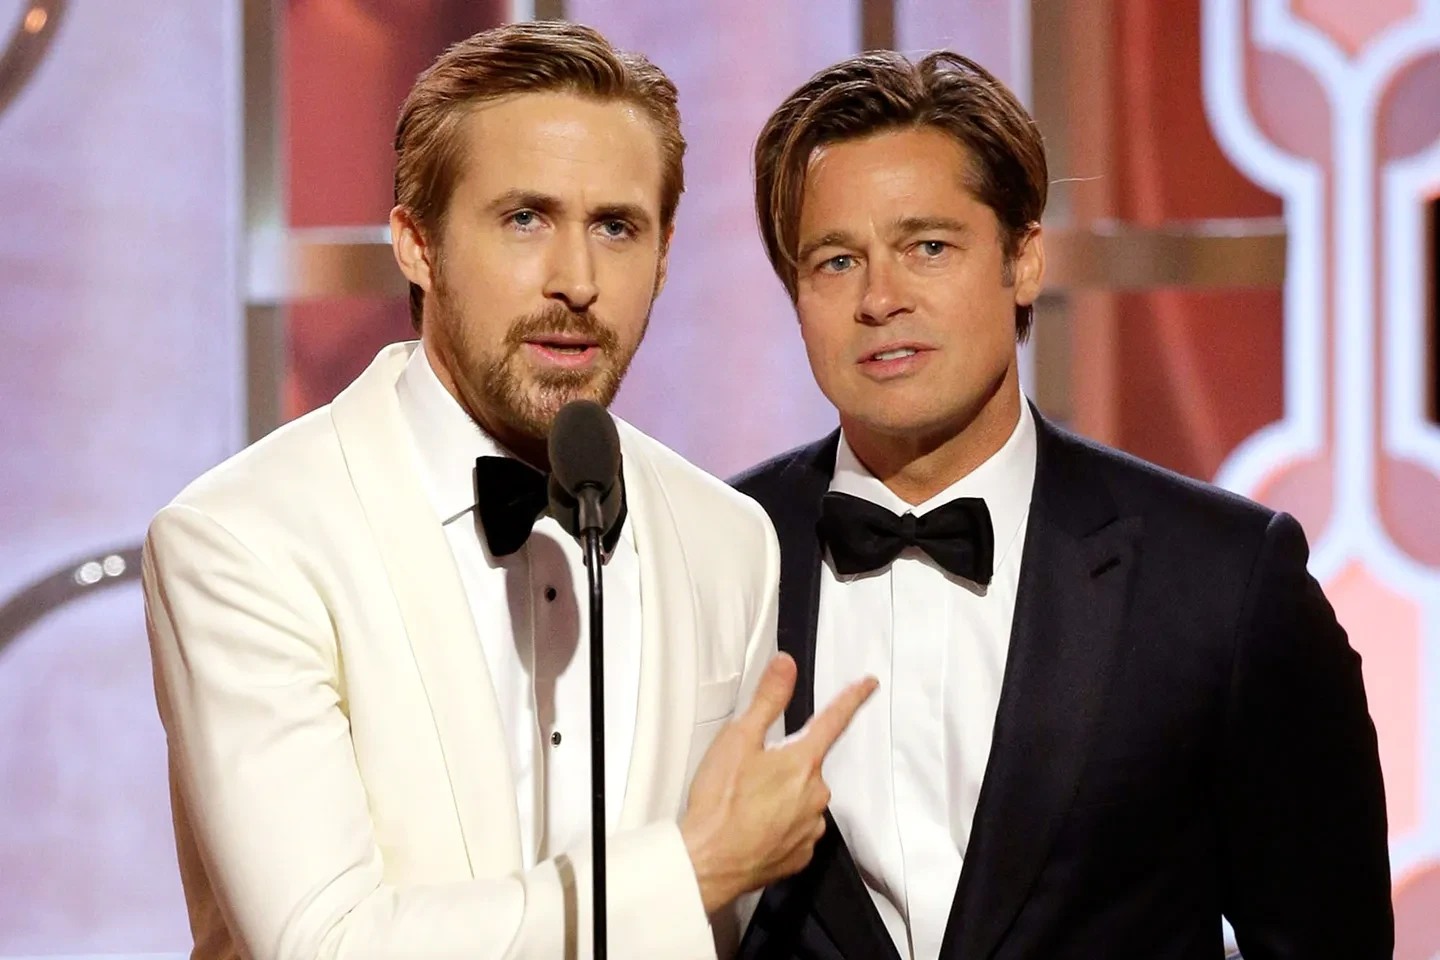 Ryan Gosling and Brad Pitt at the event